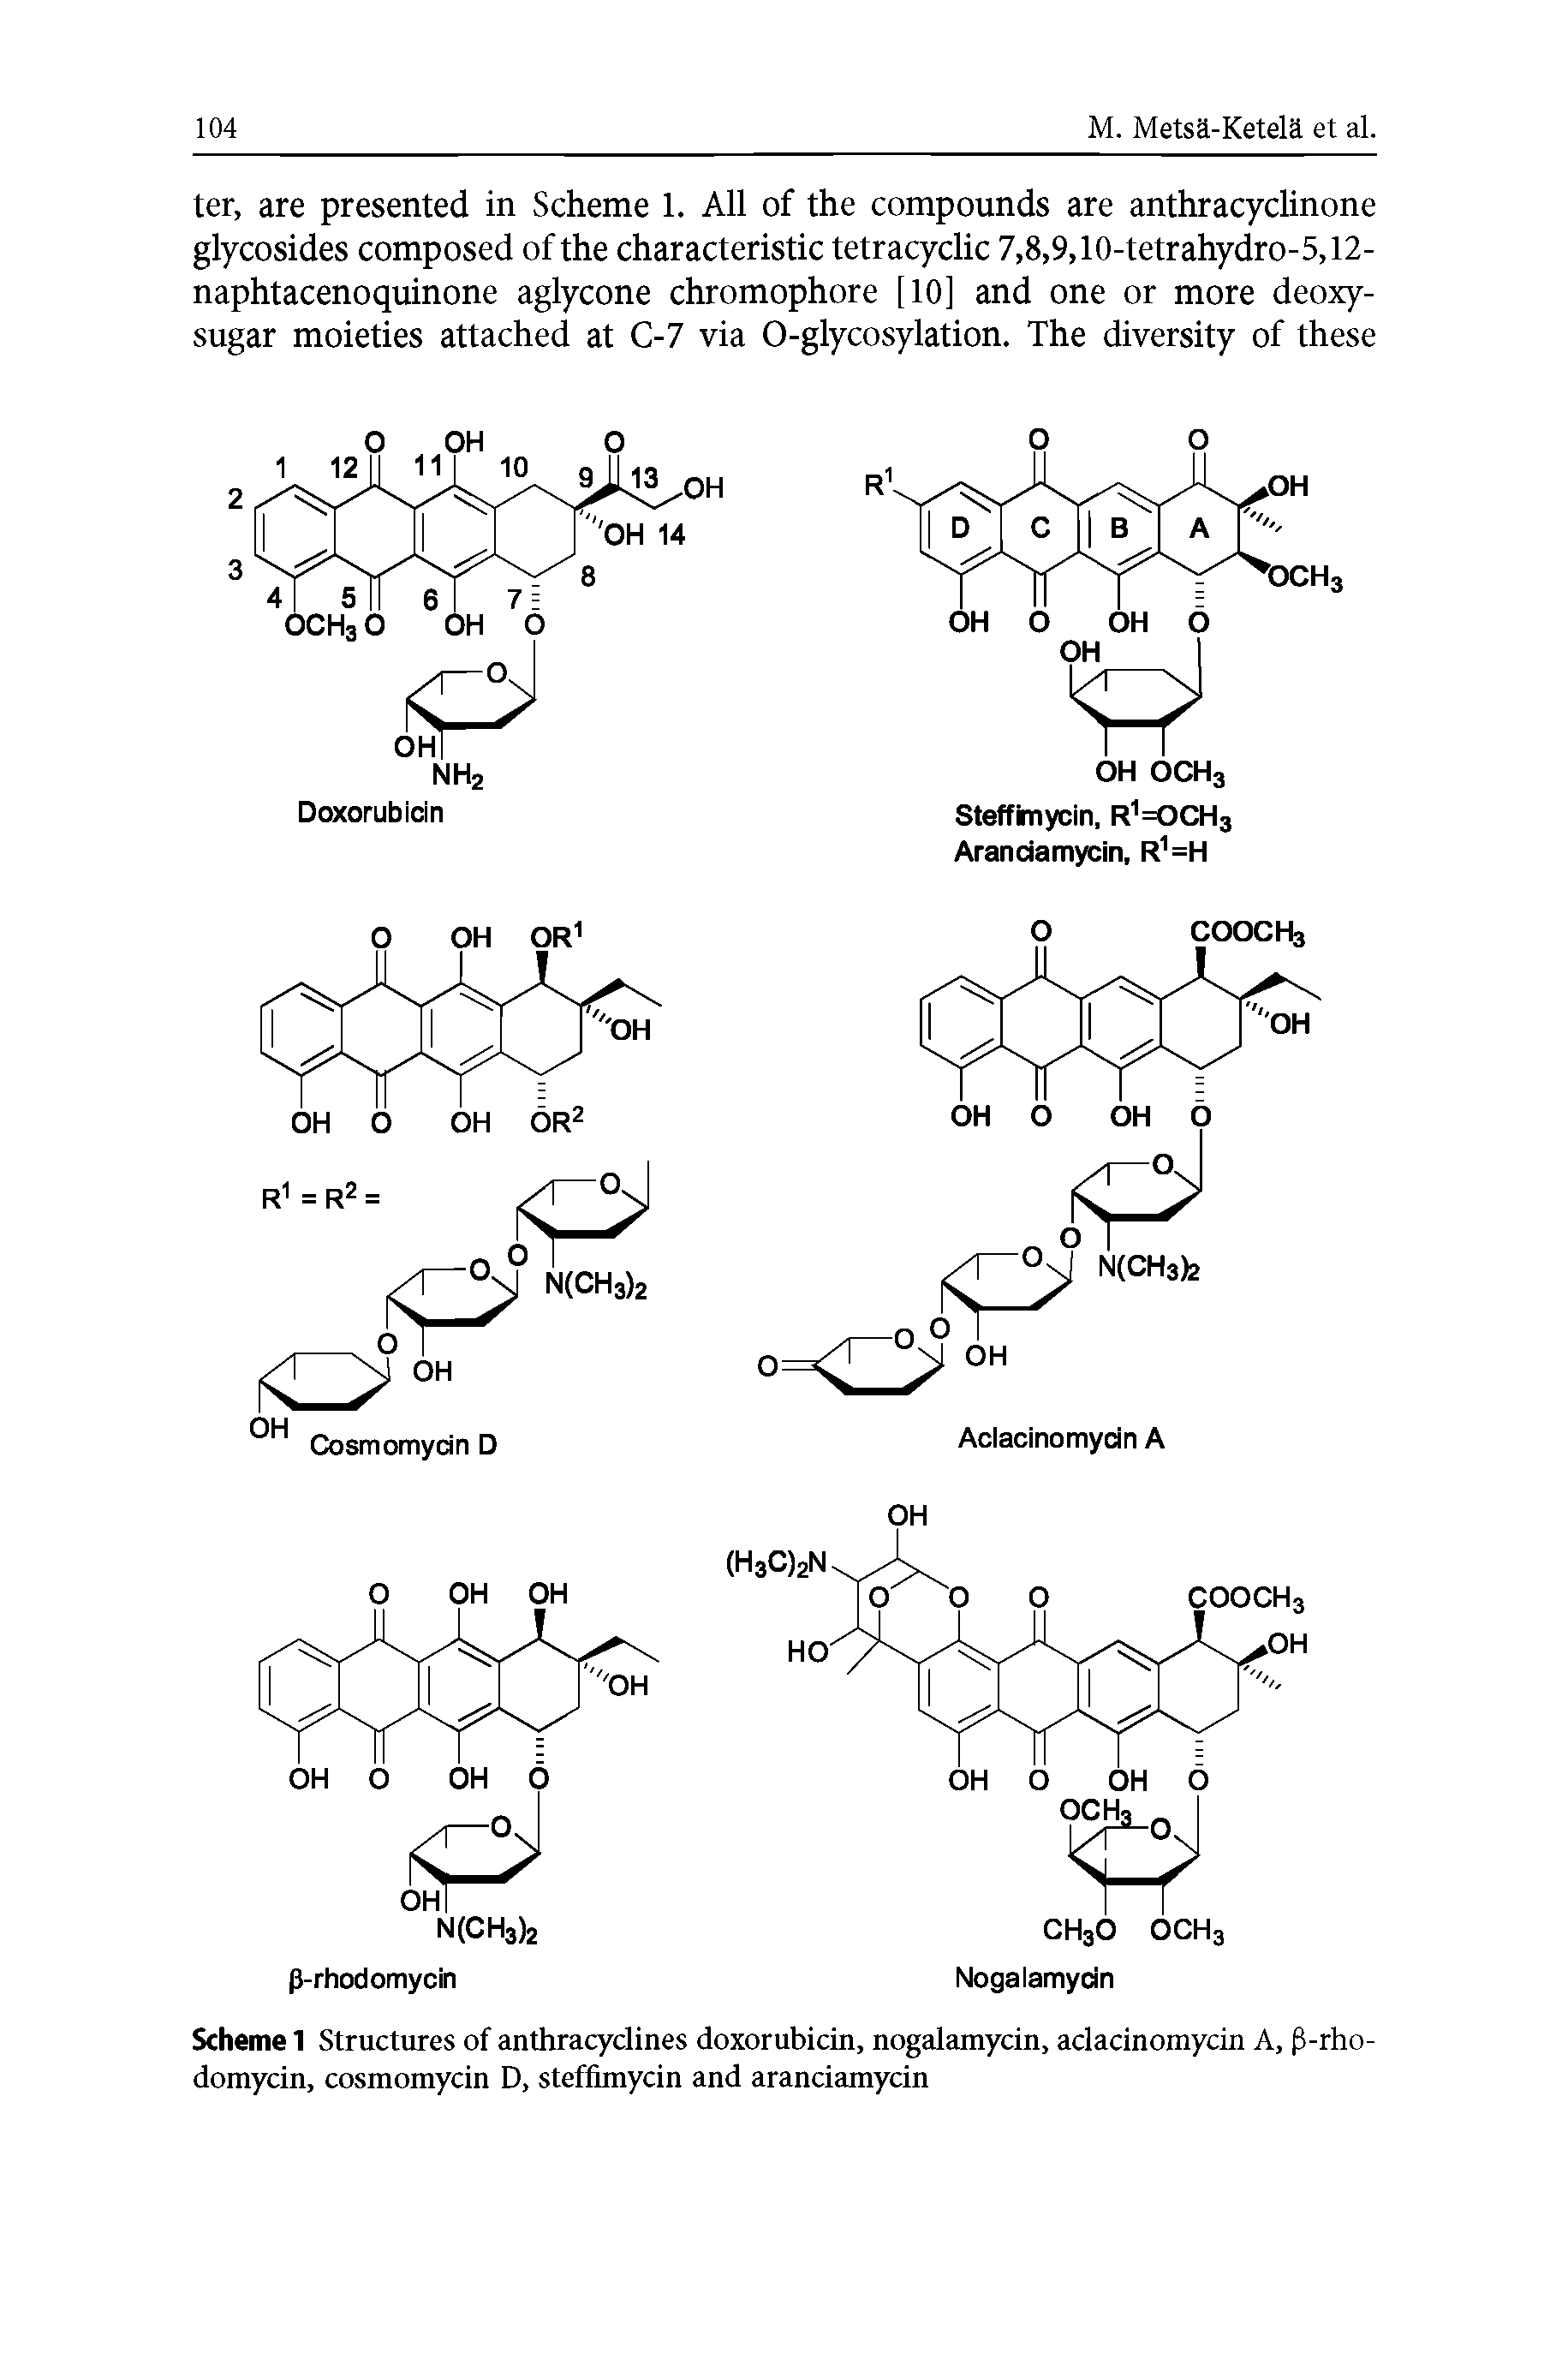 Scheme 1 Structures of anthracyclines doxorubicin, nogalamycin, aclacinomycin A, P-rho-domycin, cosmomycin D, steffimycin and aranciamycin...